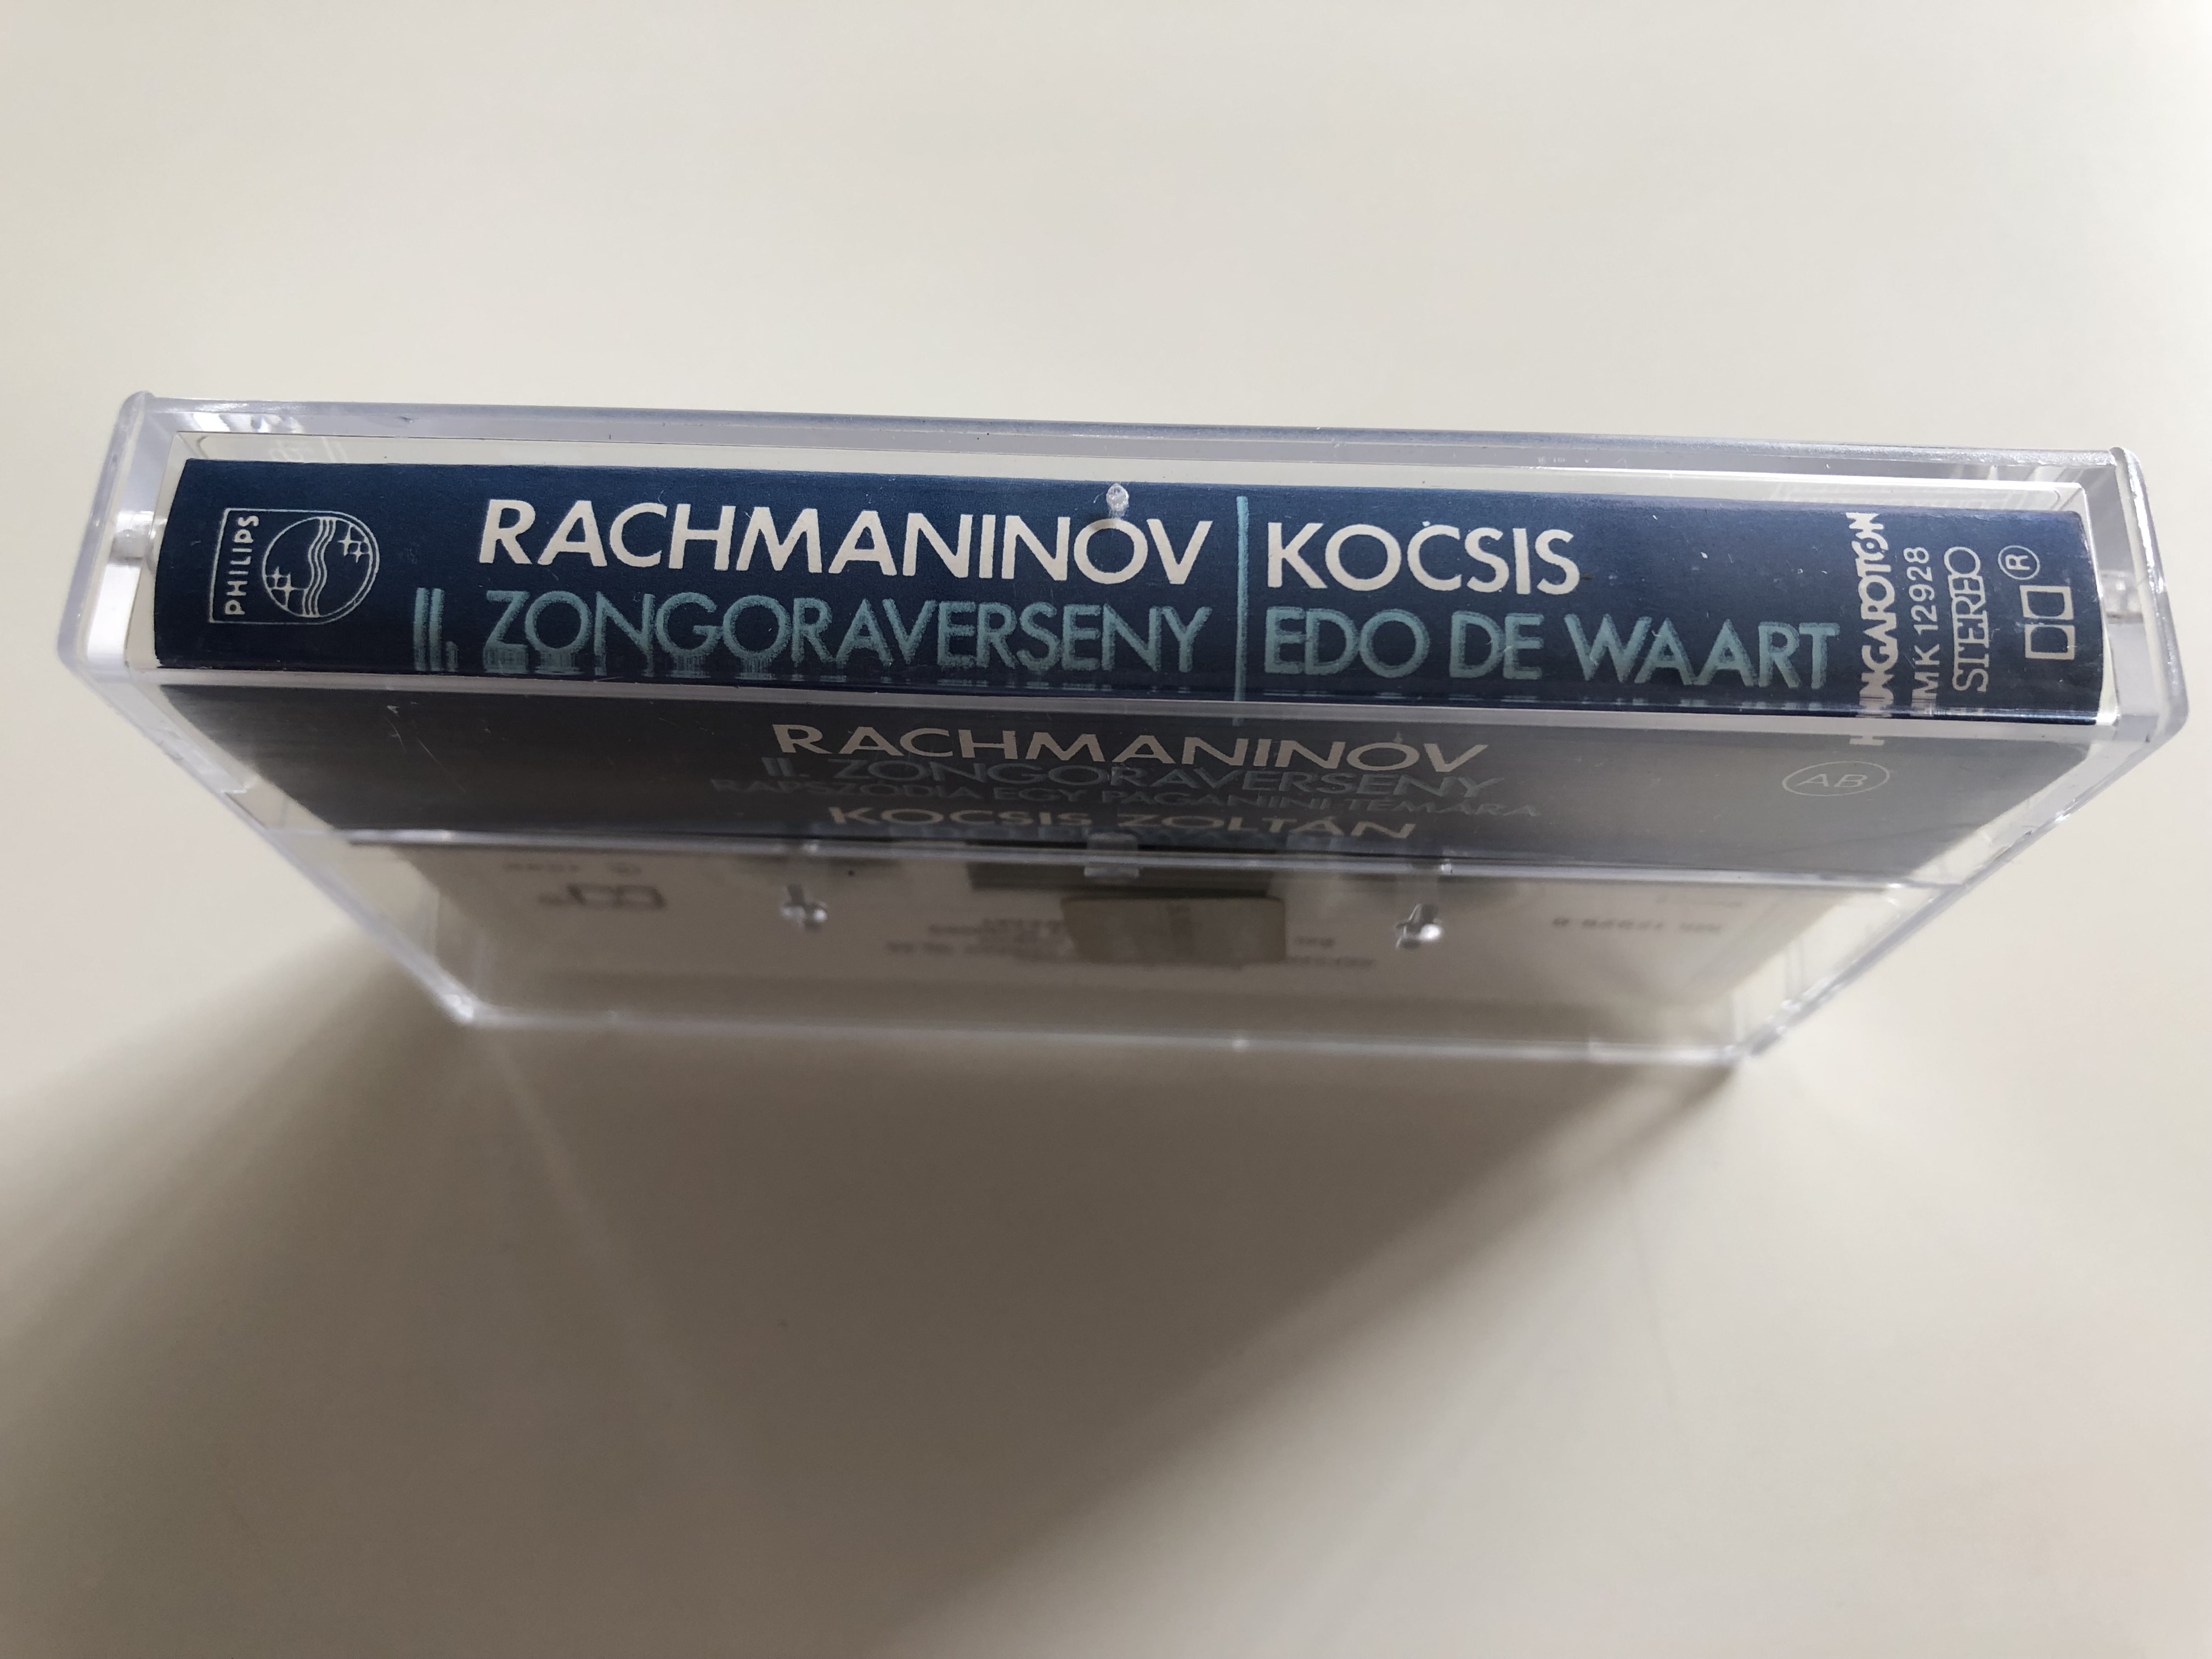 rachmaninov-ii.-zongoraverseny-rapsz-dia-egy-paganini-t-m-ra-kocsis-zolt-n-san-francisco-symphony-orchestra-conducted-edo-de-waart-hungaroton-cassette-stereo-mk-12928-2-.jpg